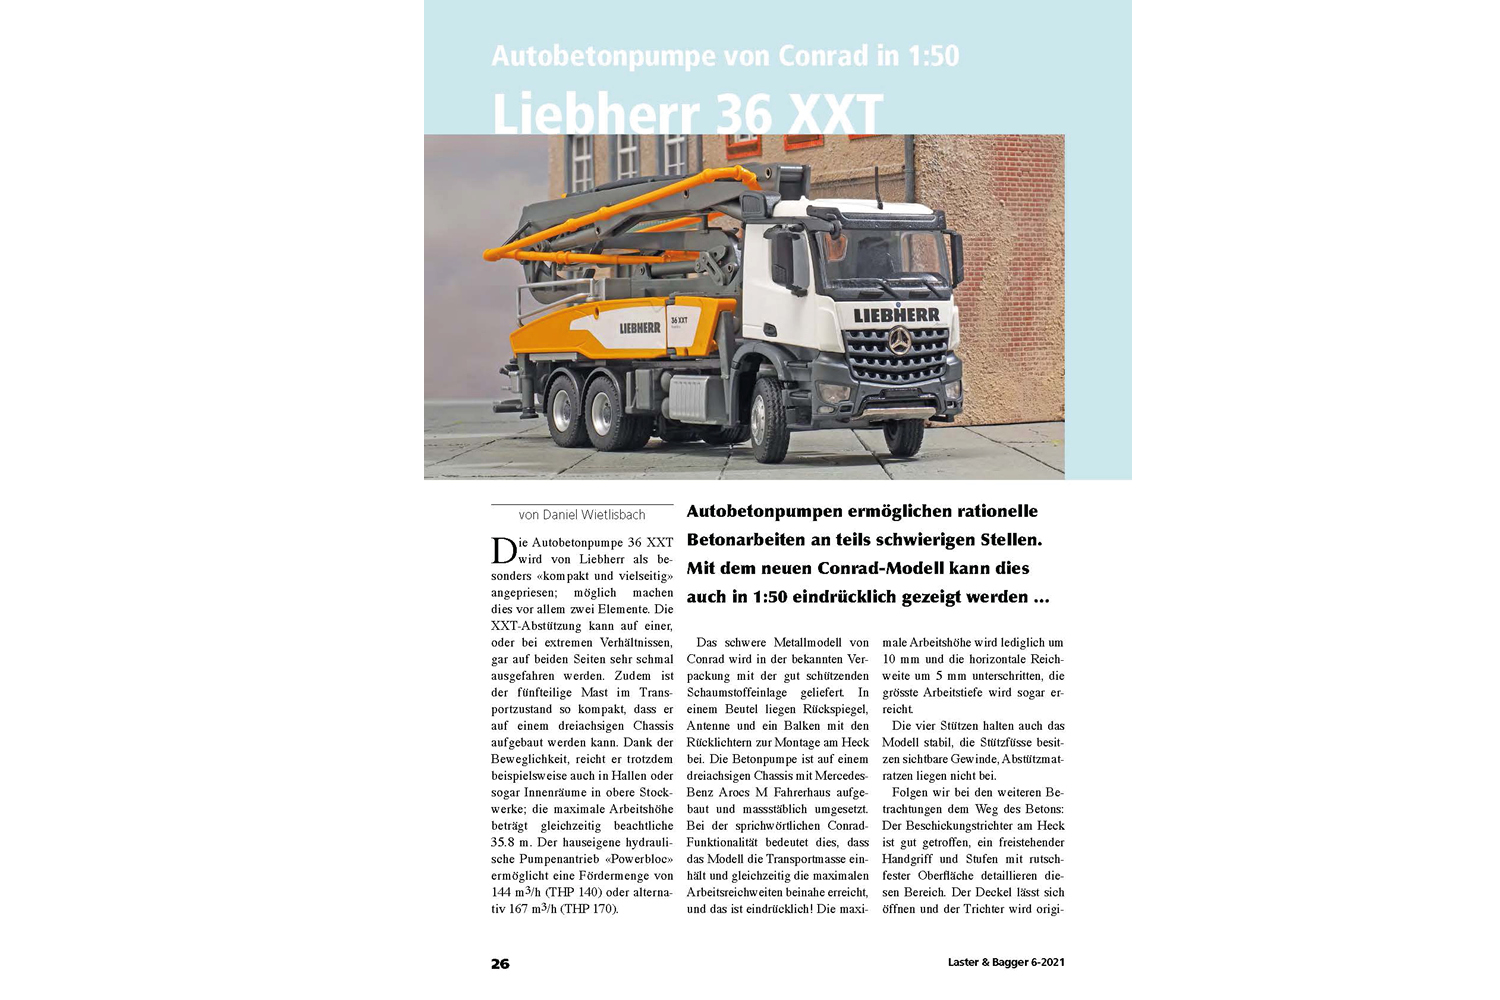 The trade magazine "Laster & Bagger" reports about Conrad